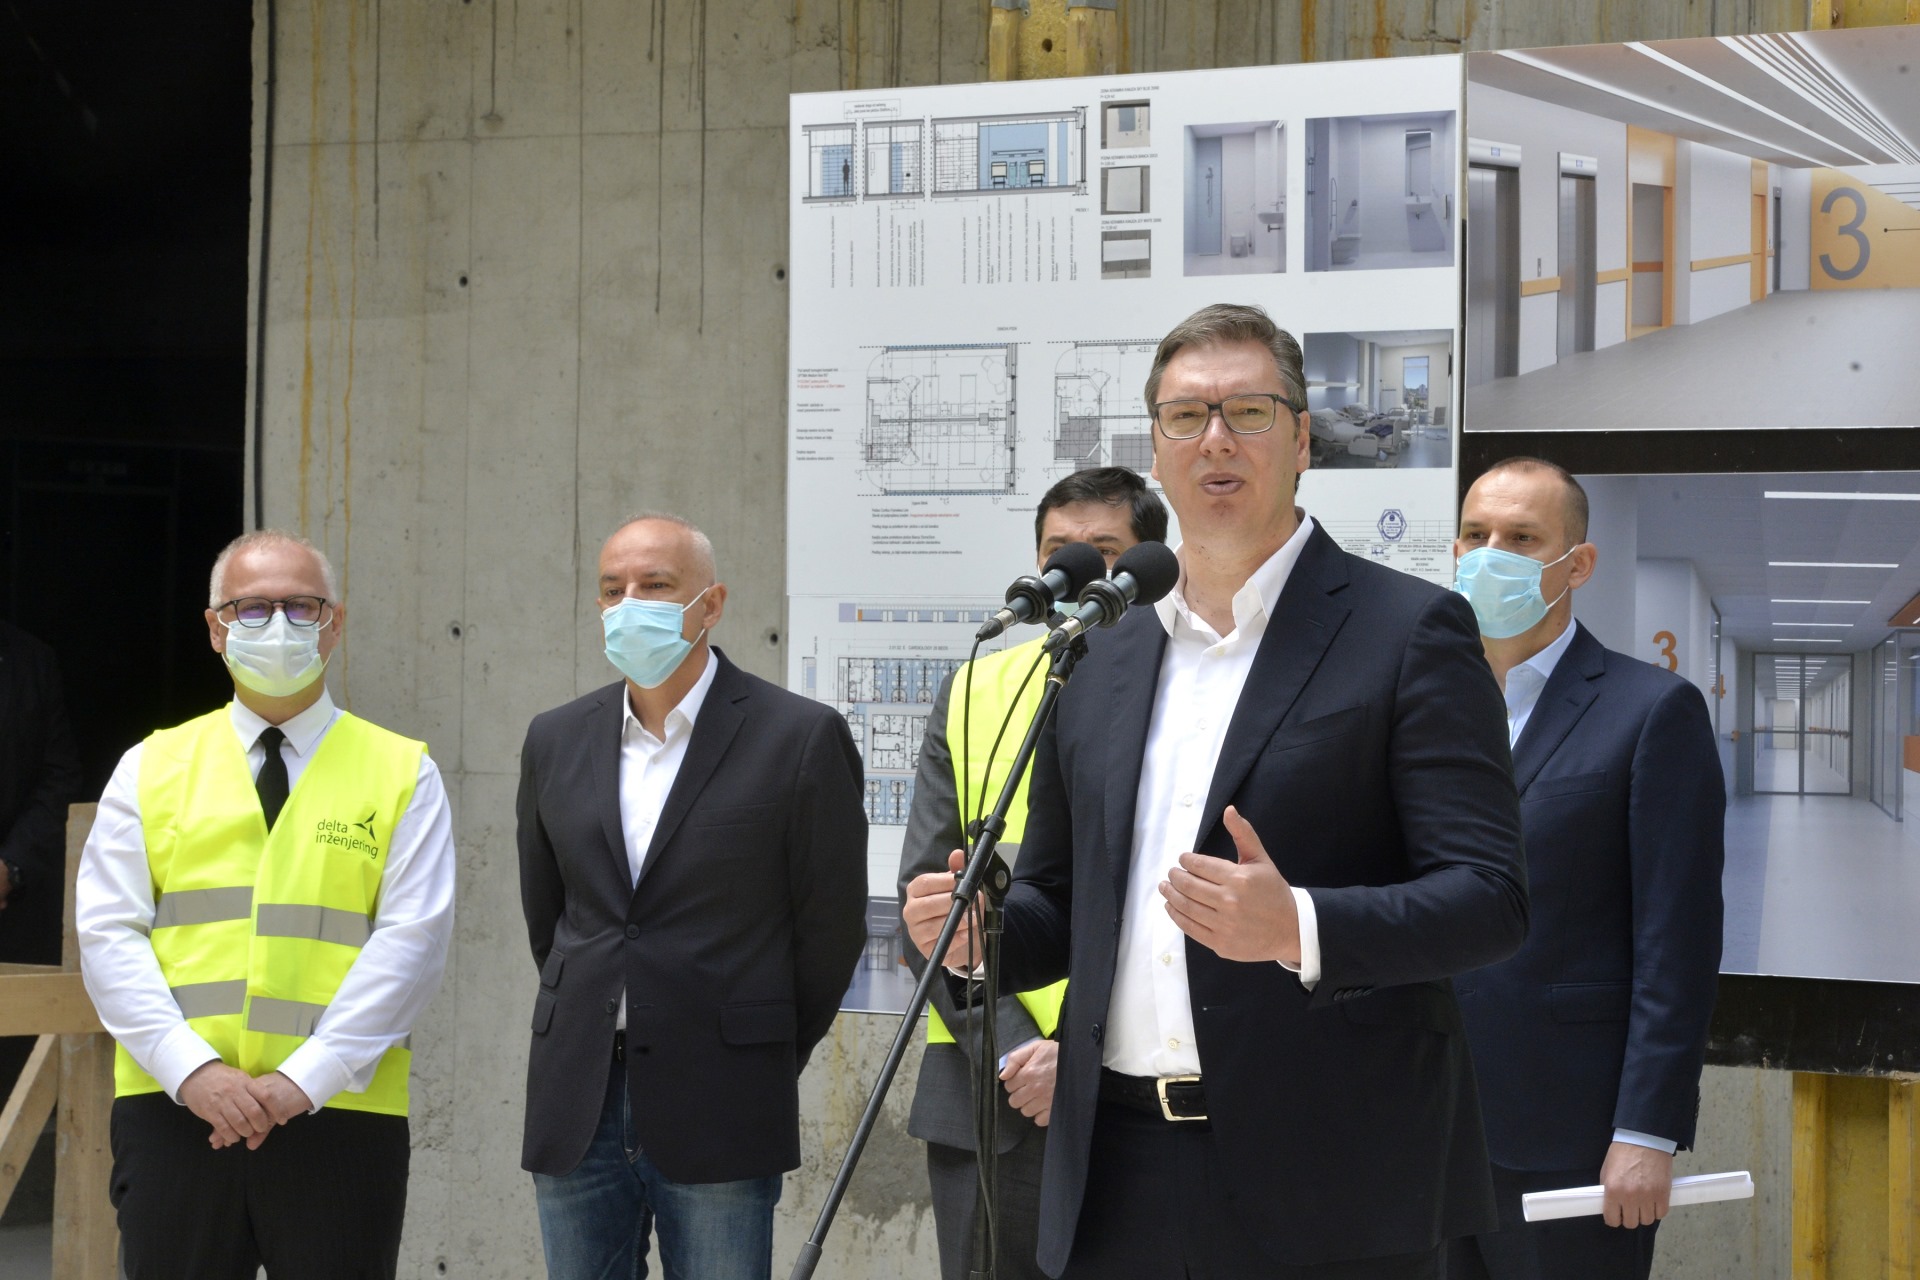 Predsednik Srbije Aleksandar Vucic obisao je danas radove na izgradnji i rekonstrukciji Klinickog centra Srbije u Beogradu.2